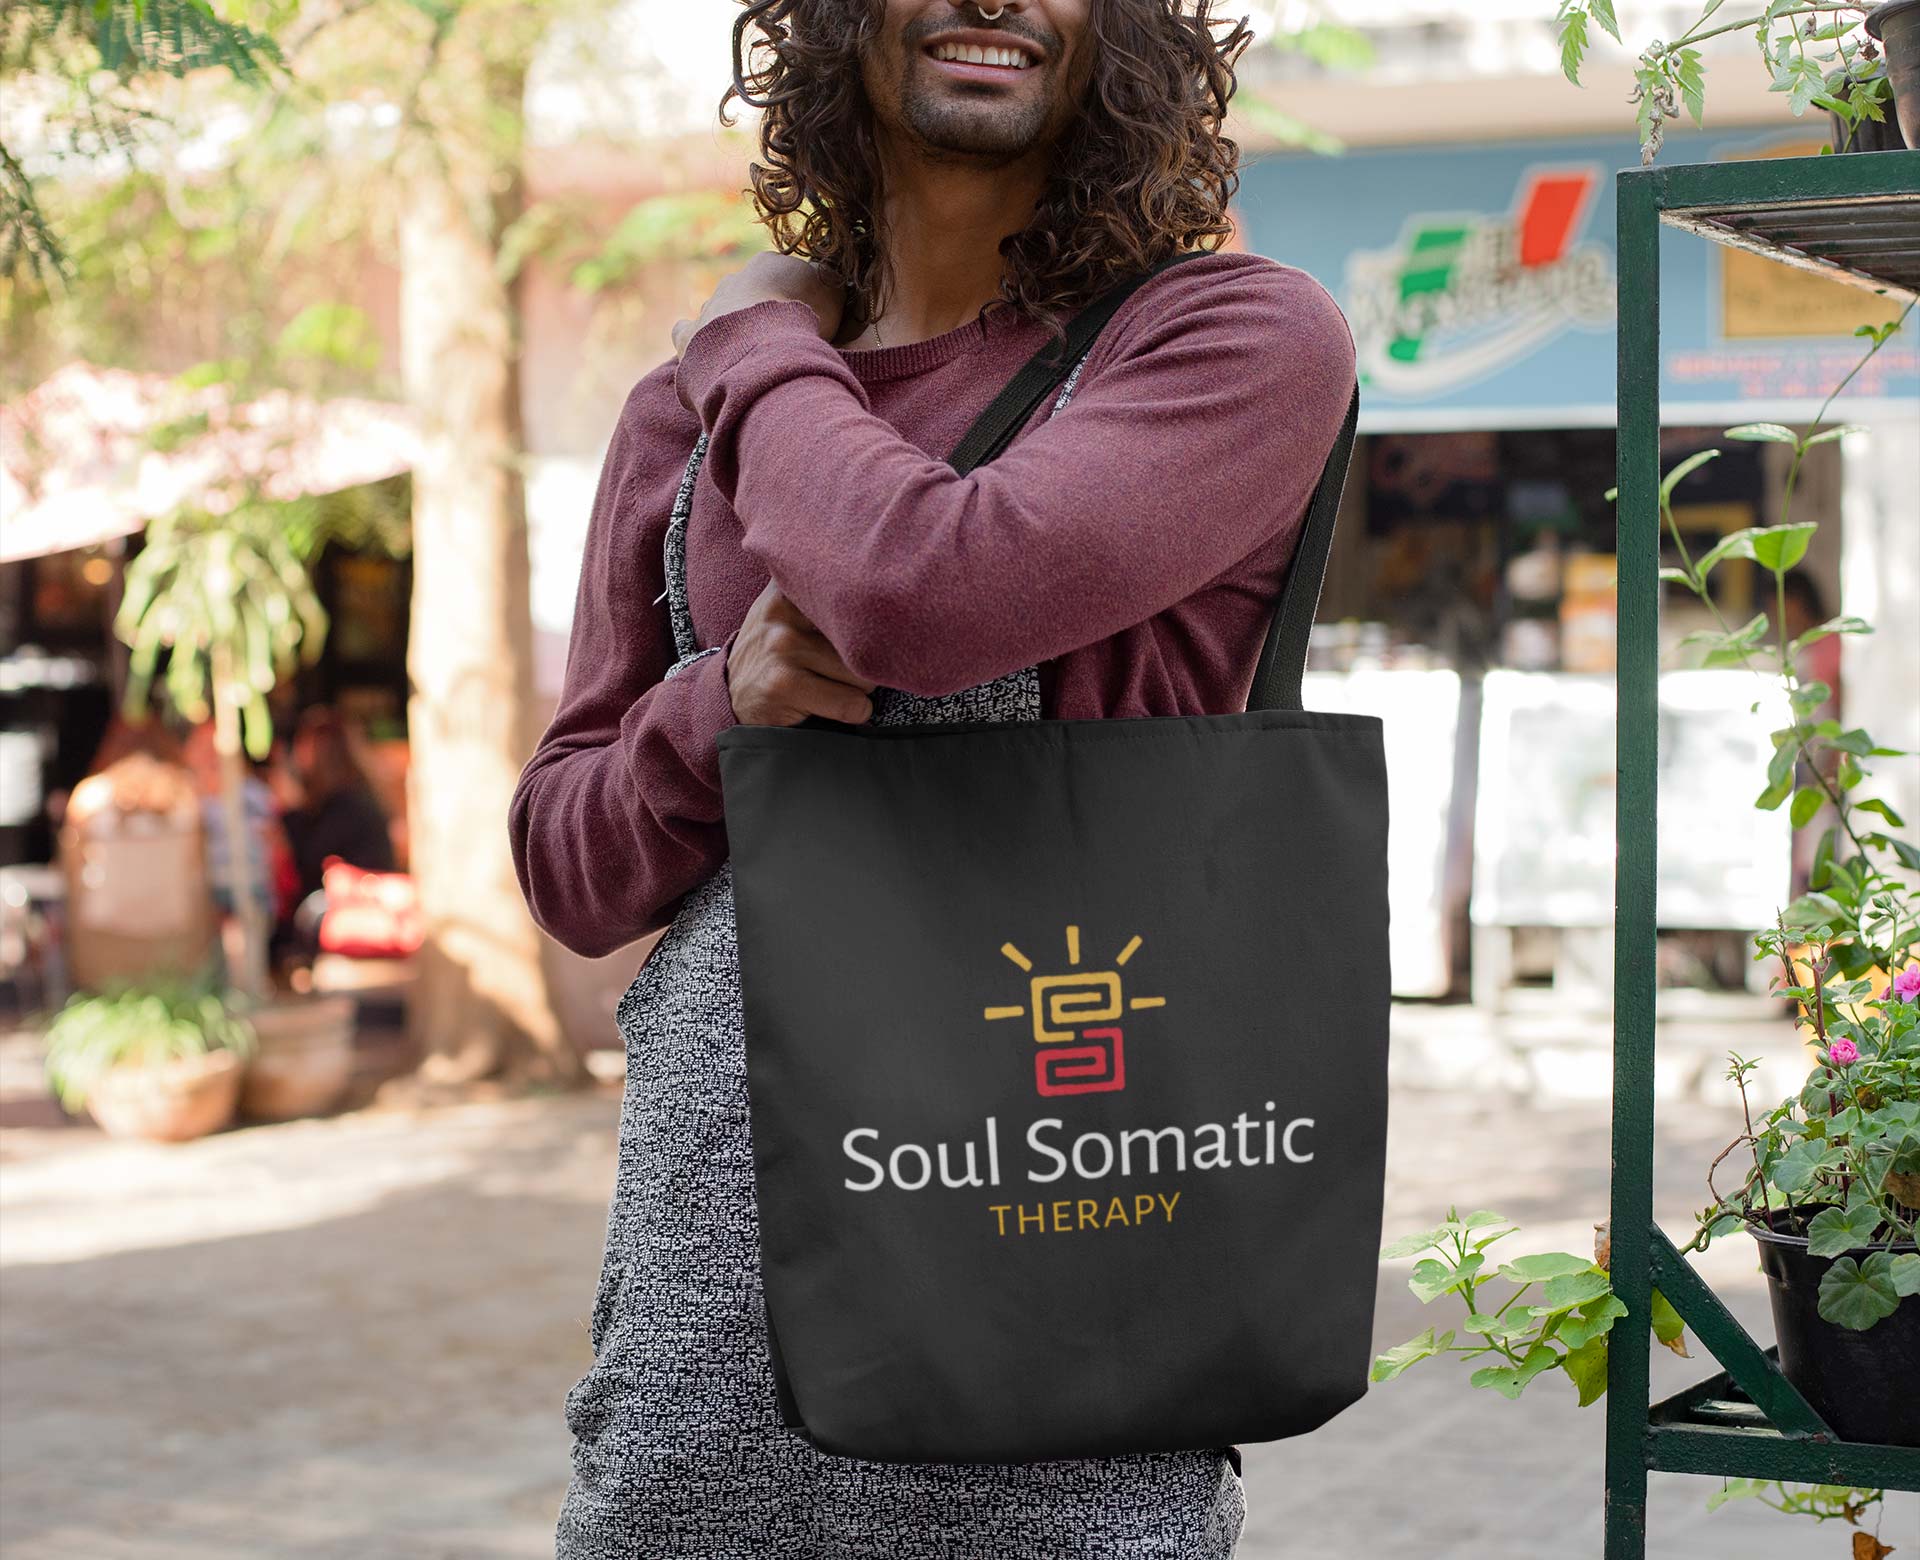 Soul Somatic logo on tote bag